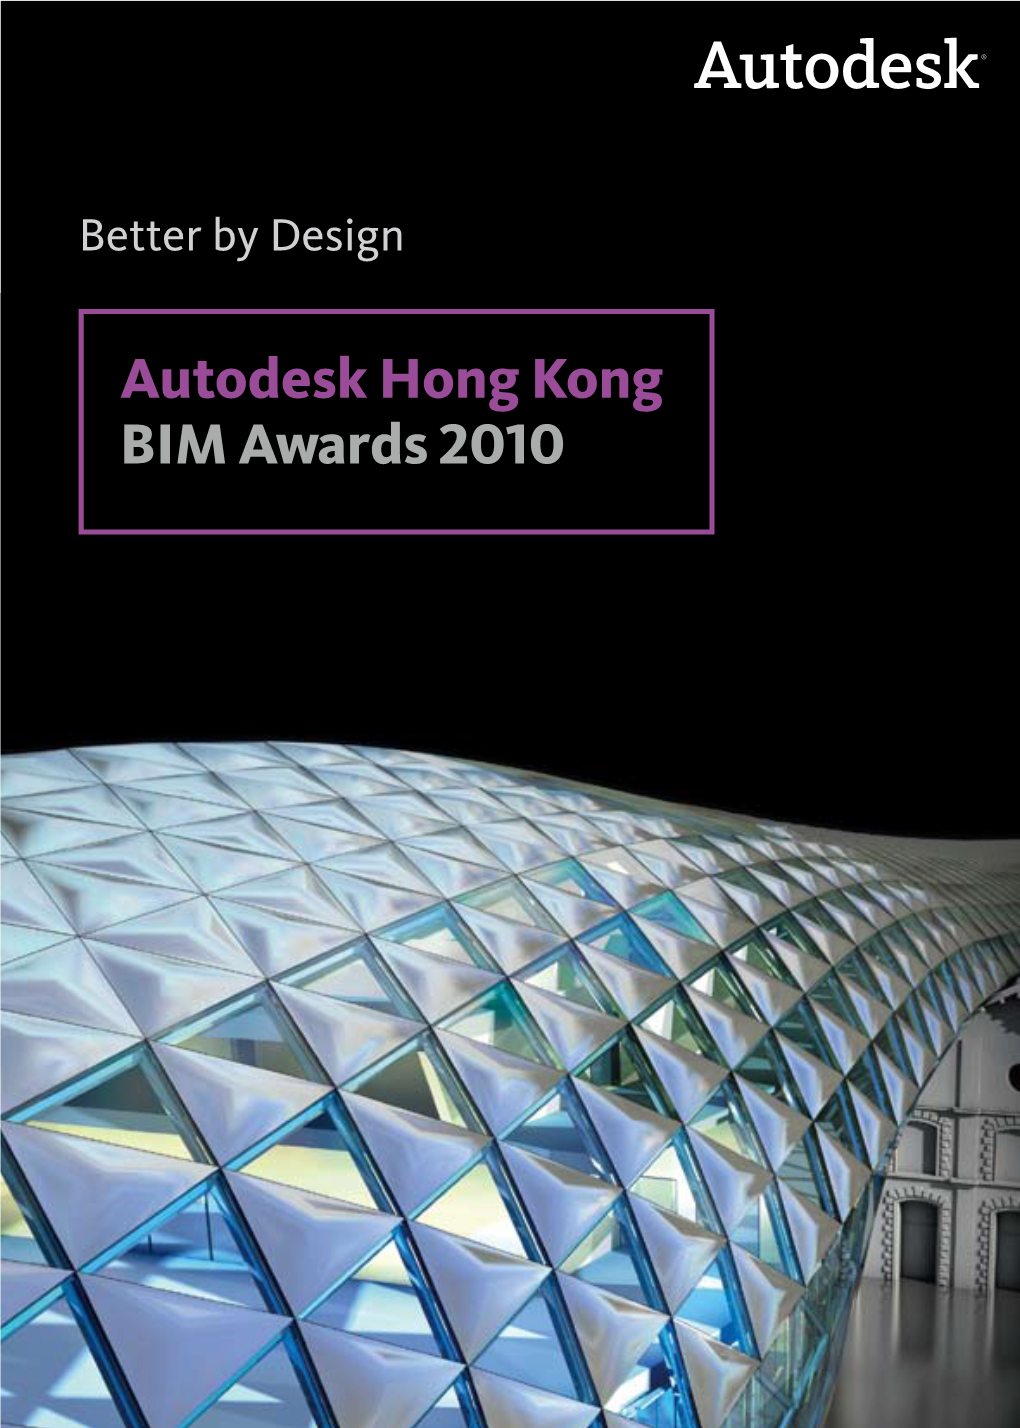 Autodesk Hong Kong BIM Awards 2010 Sponsors